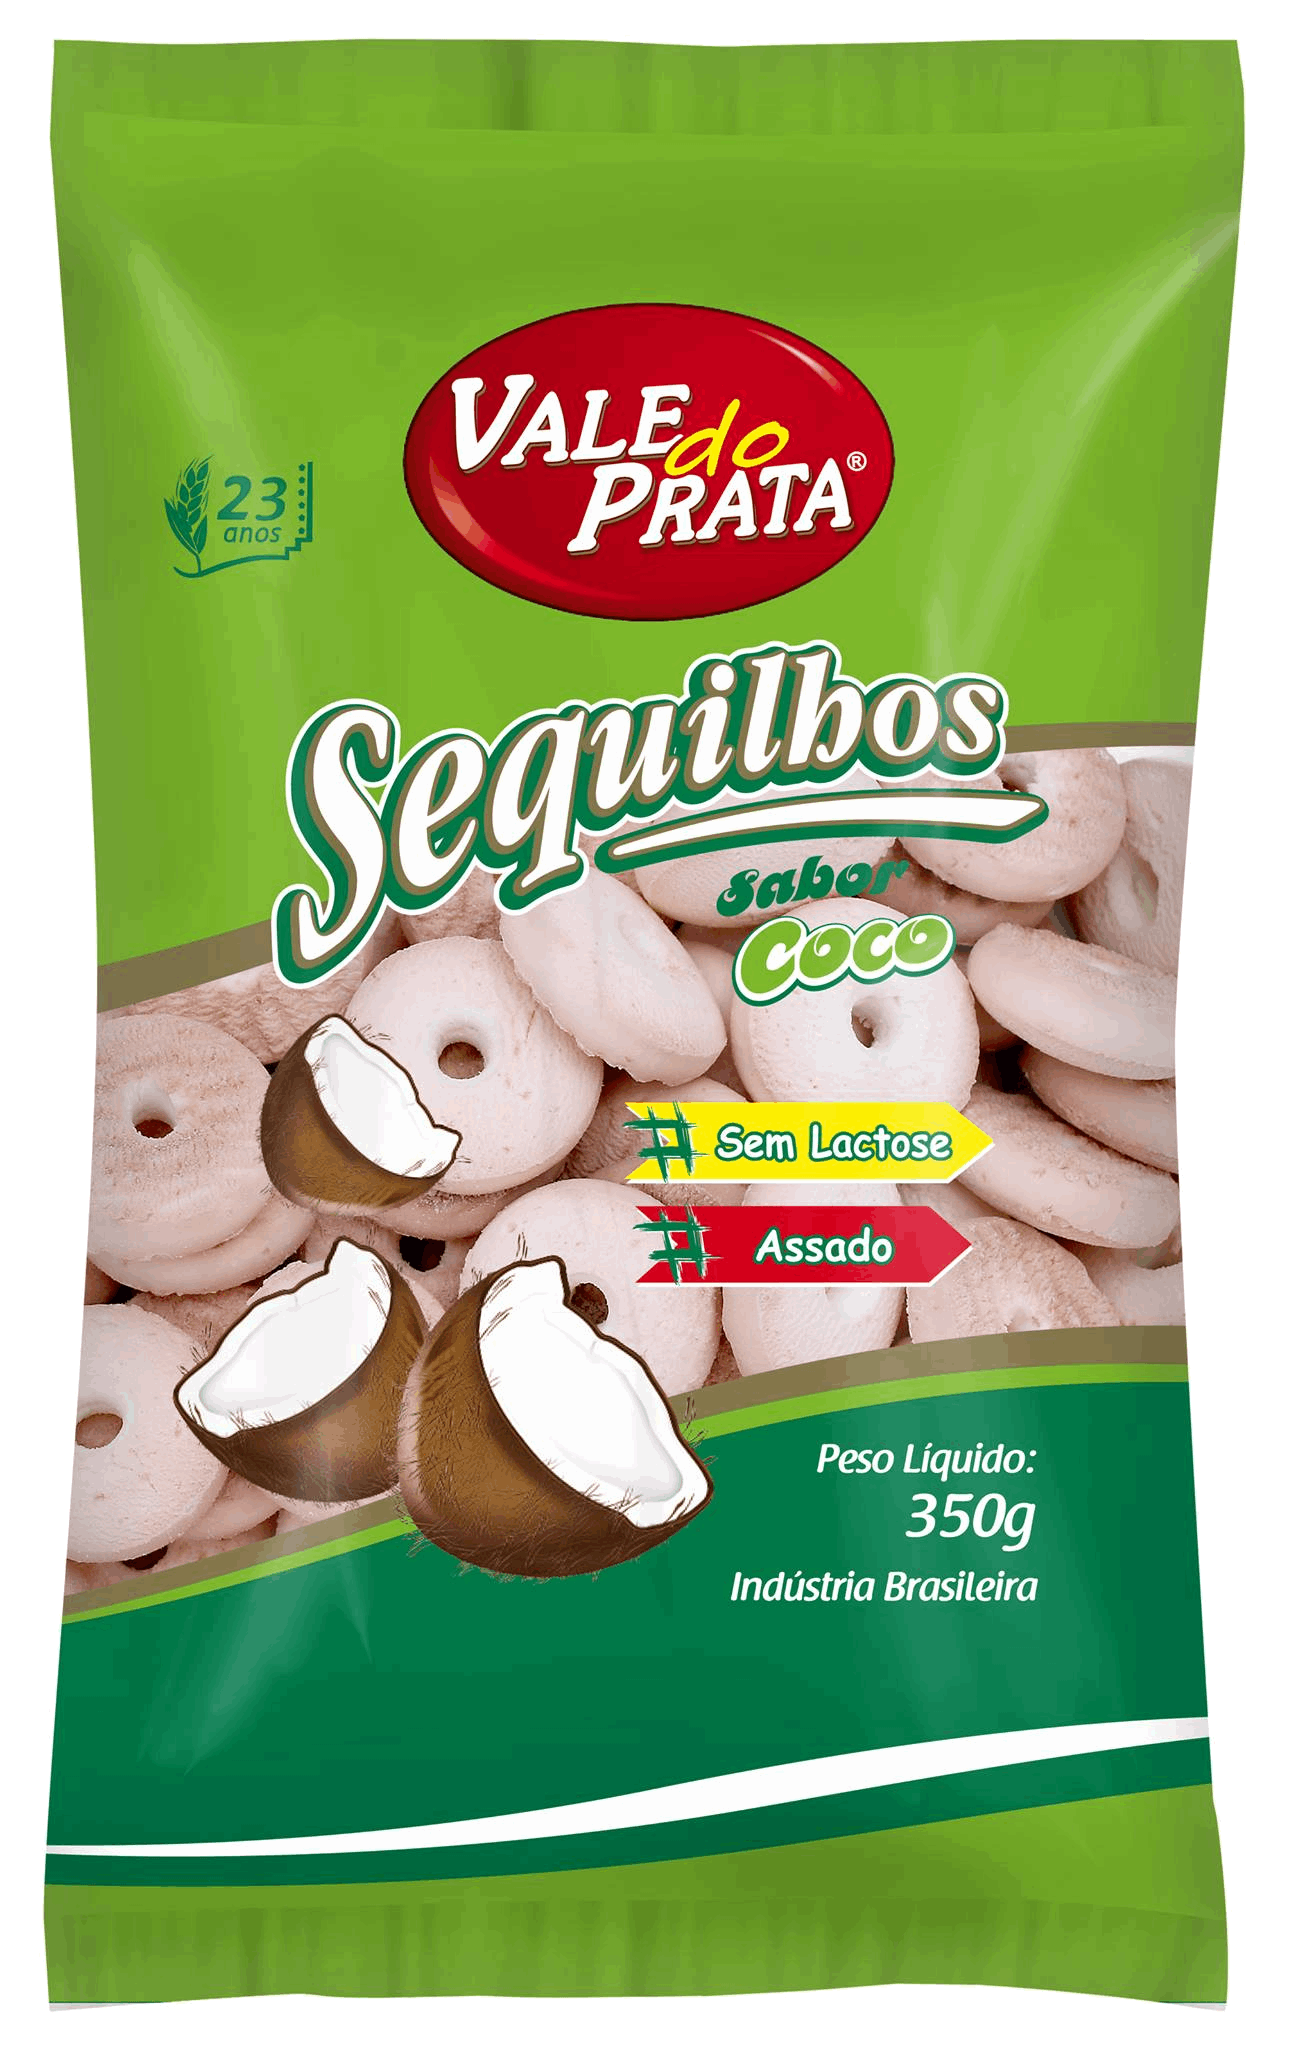 BISCOITO SEQUILHOS COCO VALE DO PRATA 350g.(Rosquillas)